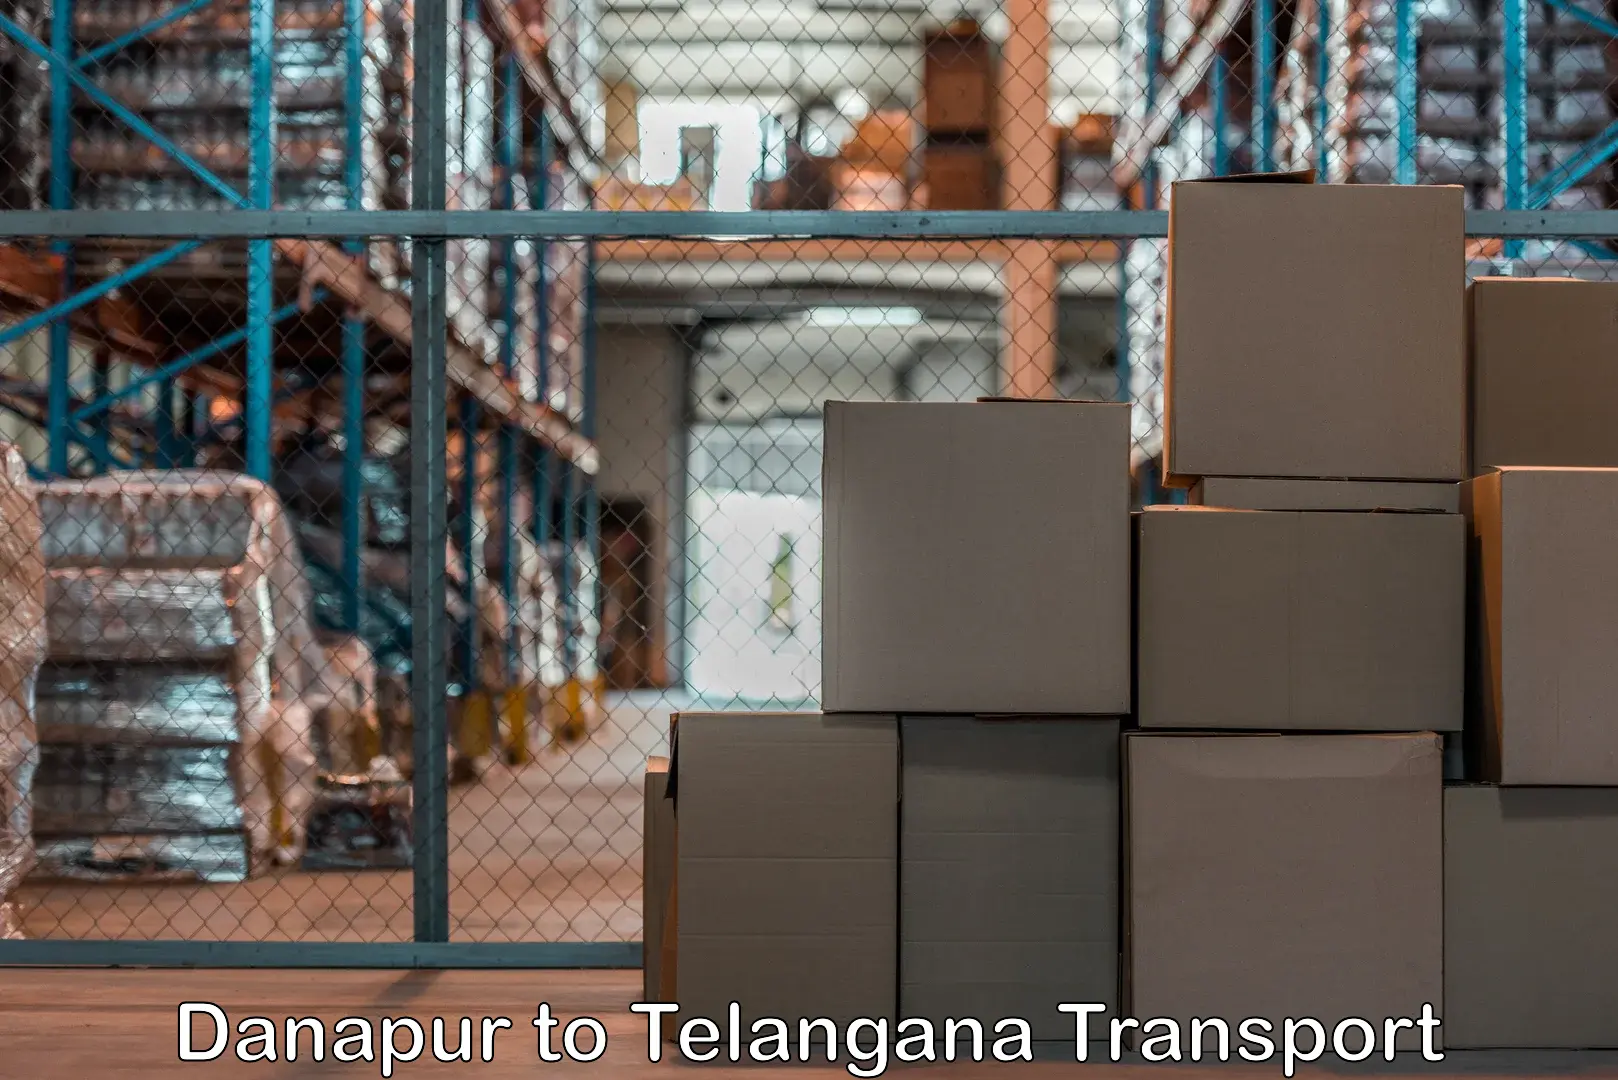 Transport in sharing Danapur to Balanagar